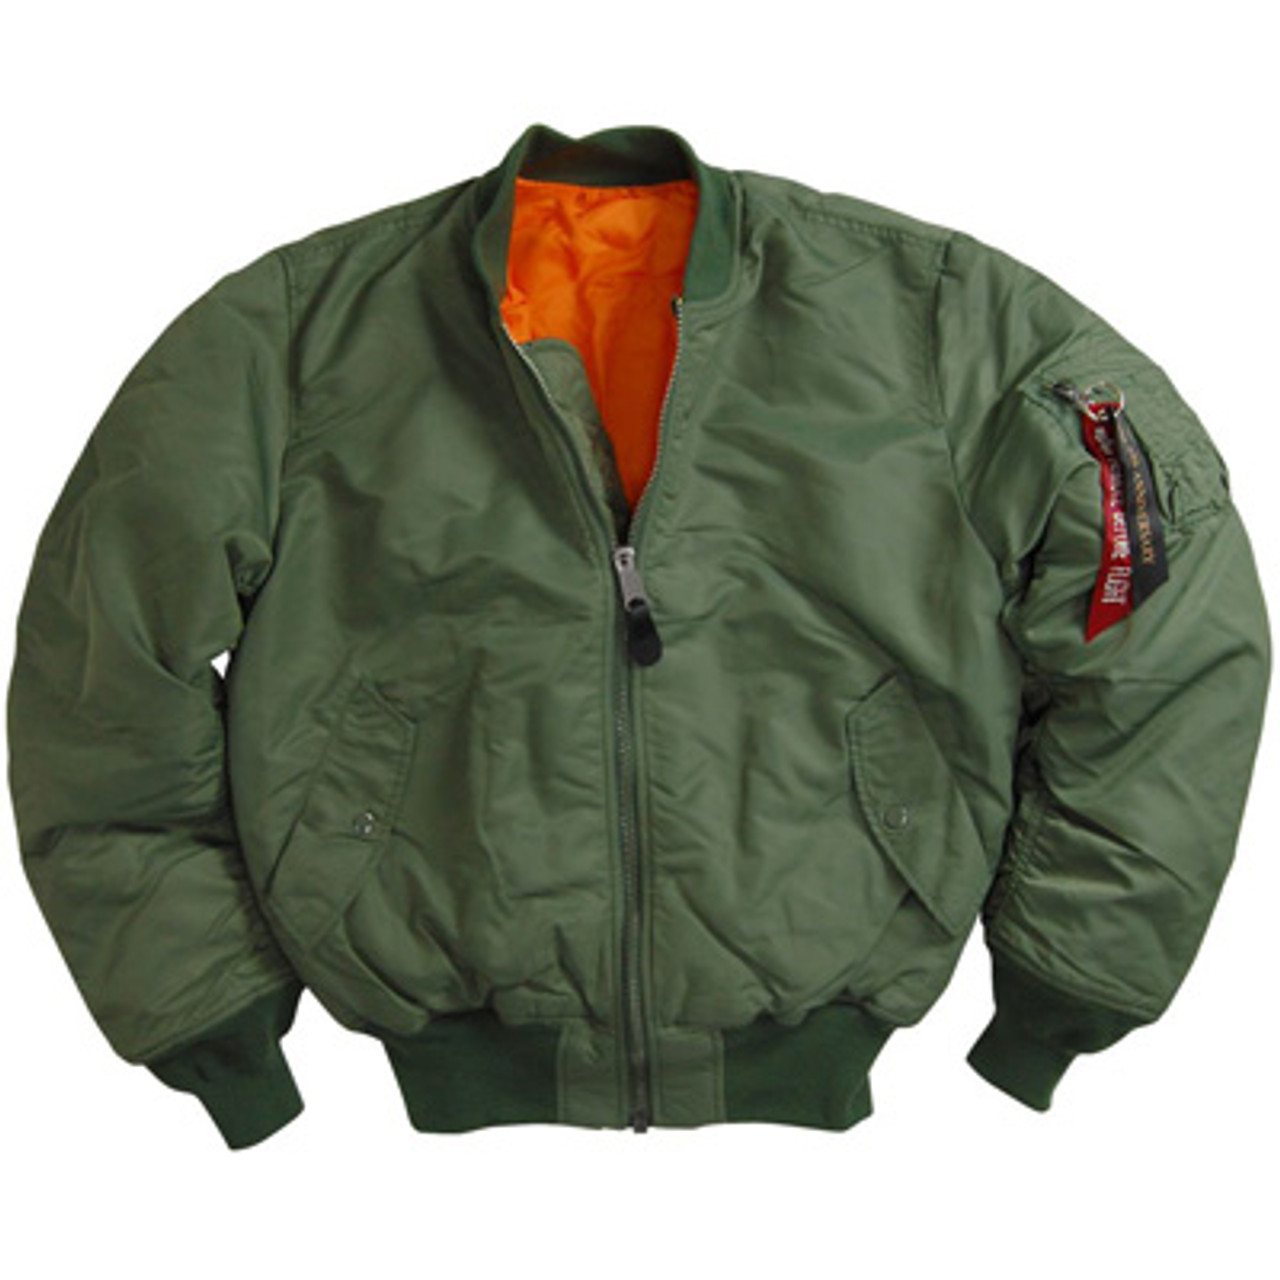 Shop Alpha Sage Green MA-1 - Army Flight Gear Fatigues Navy Jackets